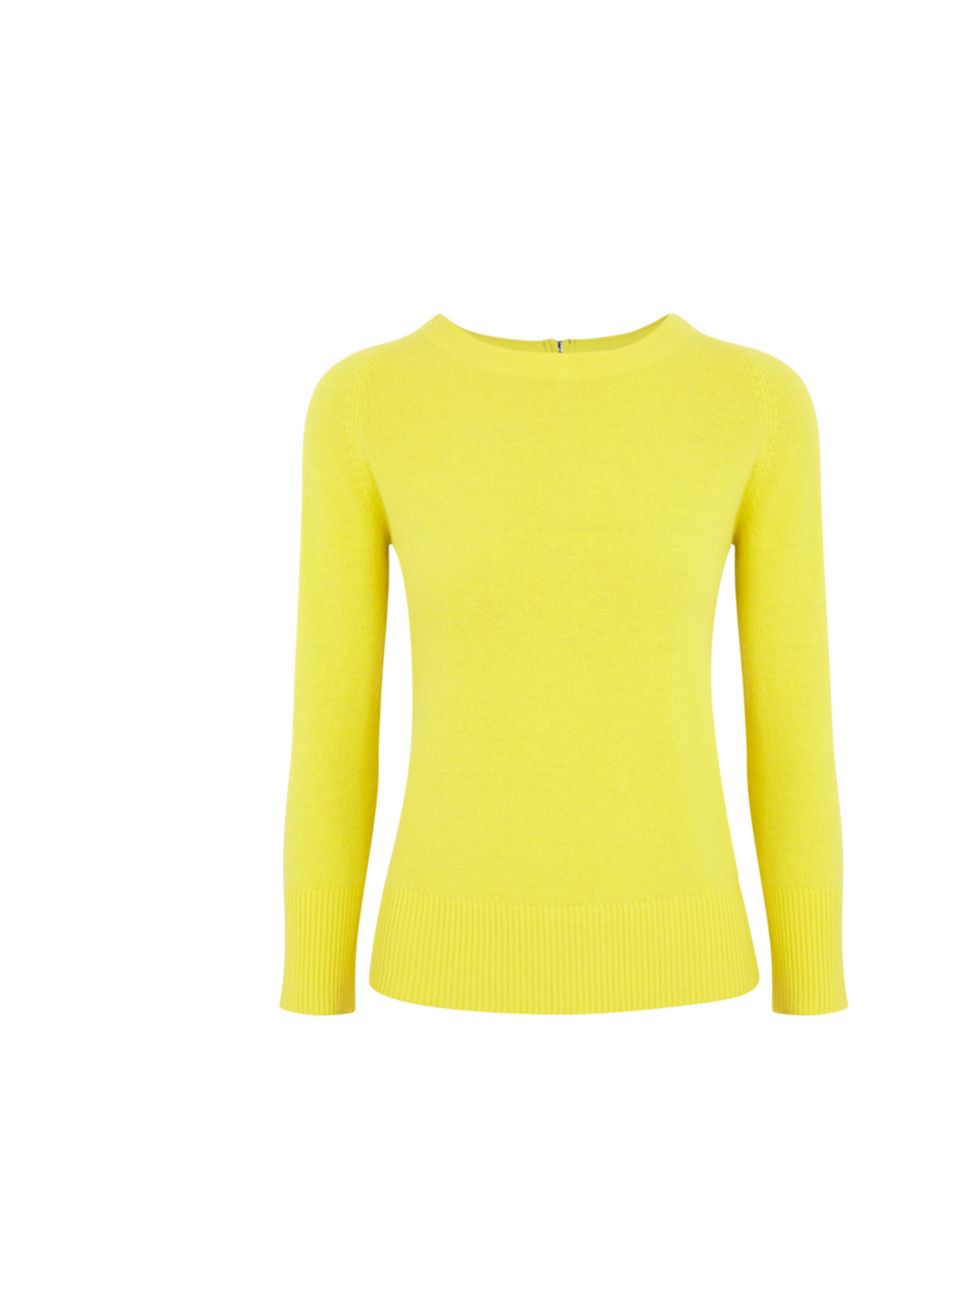 <p>Diane Von Furstenberg neon wool jumper, £215, at <a href="http://www.harveynichols.com/womens/categories-1/designer-knitwear/jumpers/s435433-noa-bis-fine-knit-wool-blend-jumper.html?colour=YELLOW">Harvey Nichols </a></p>